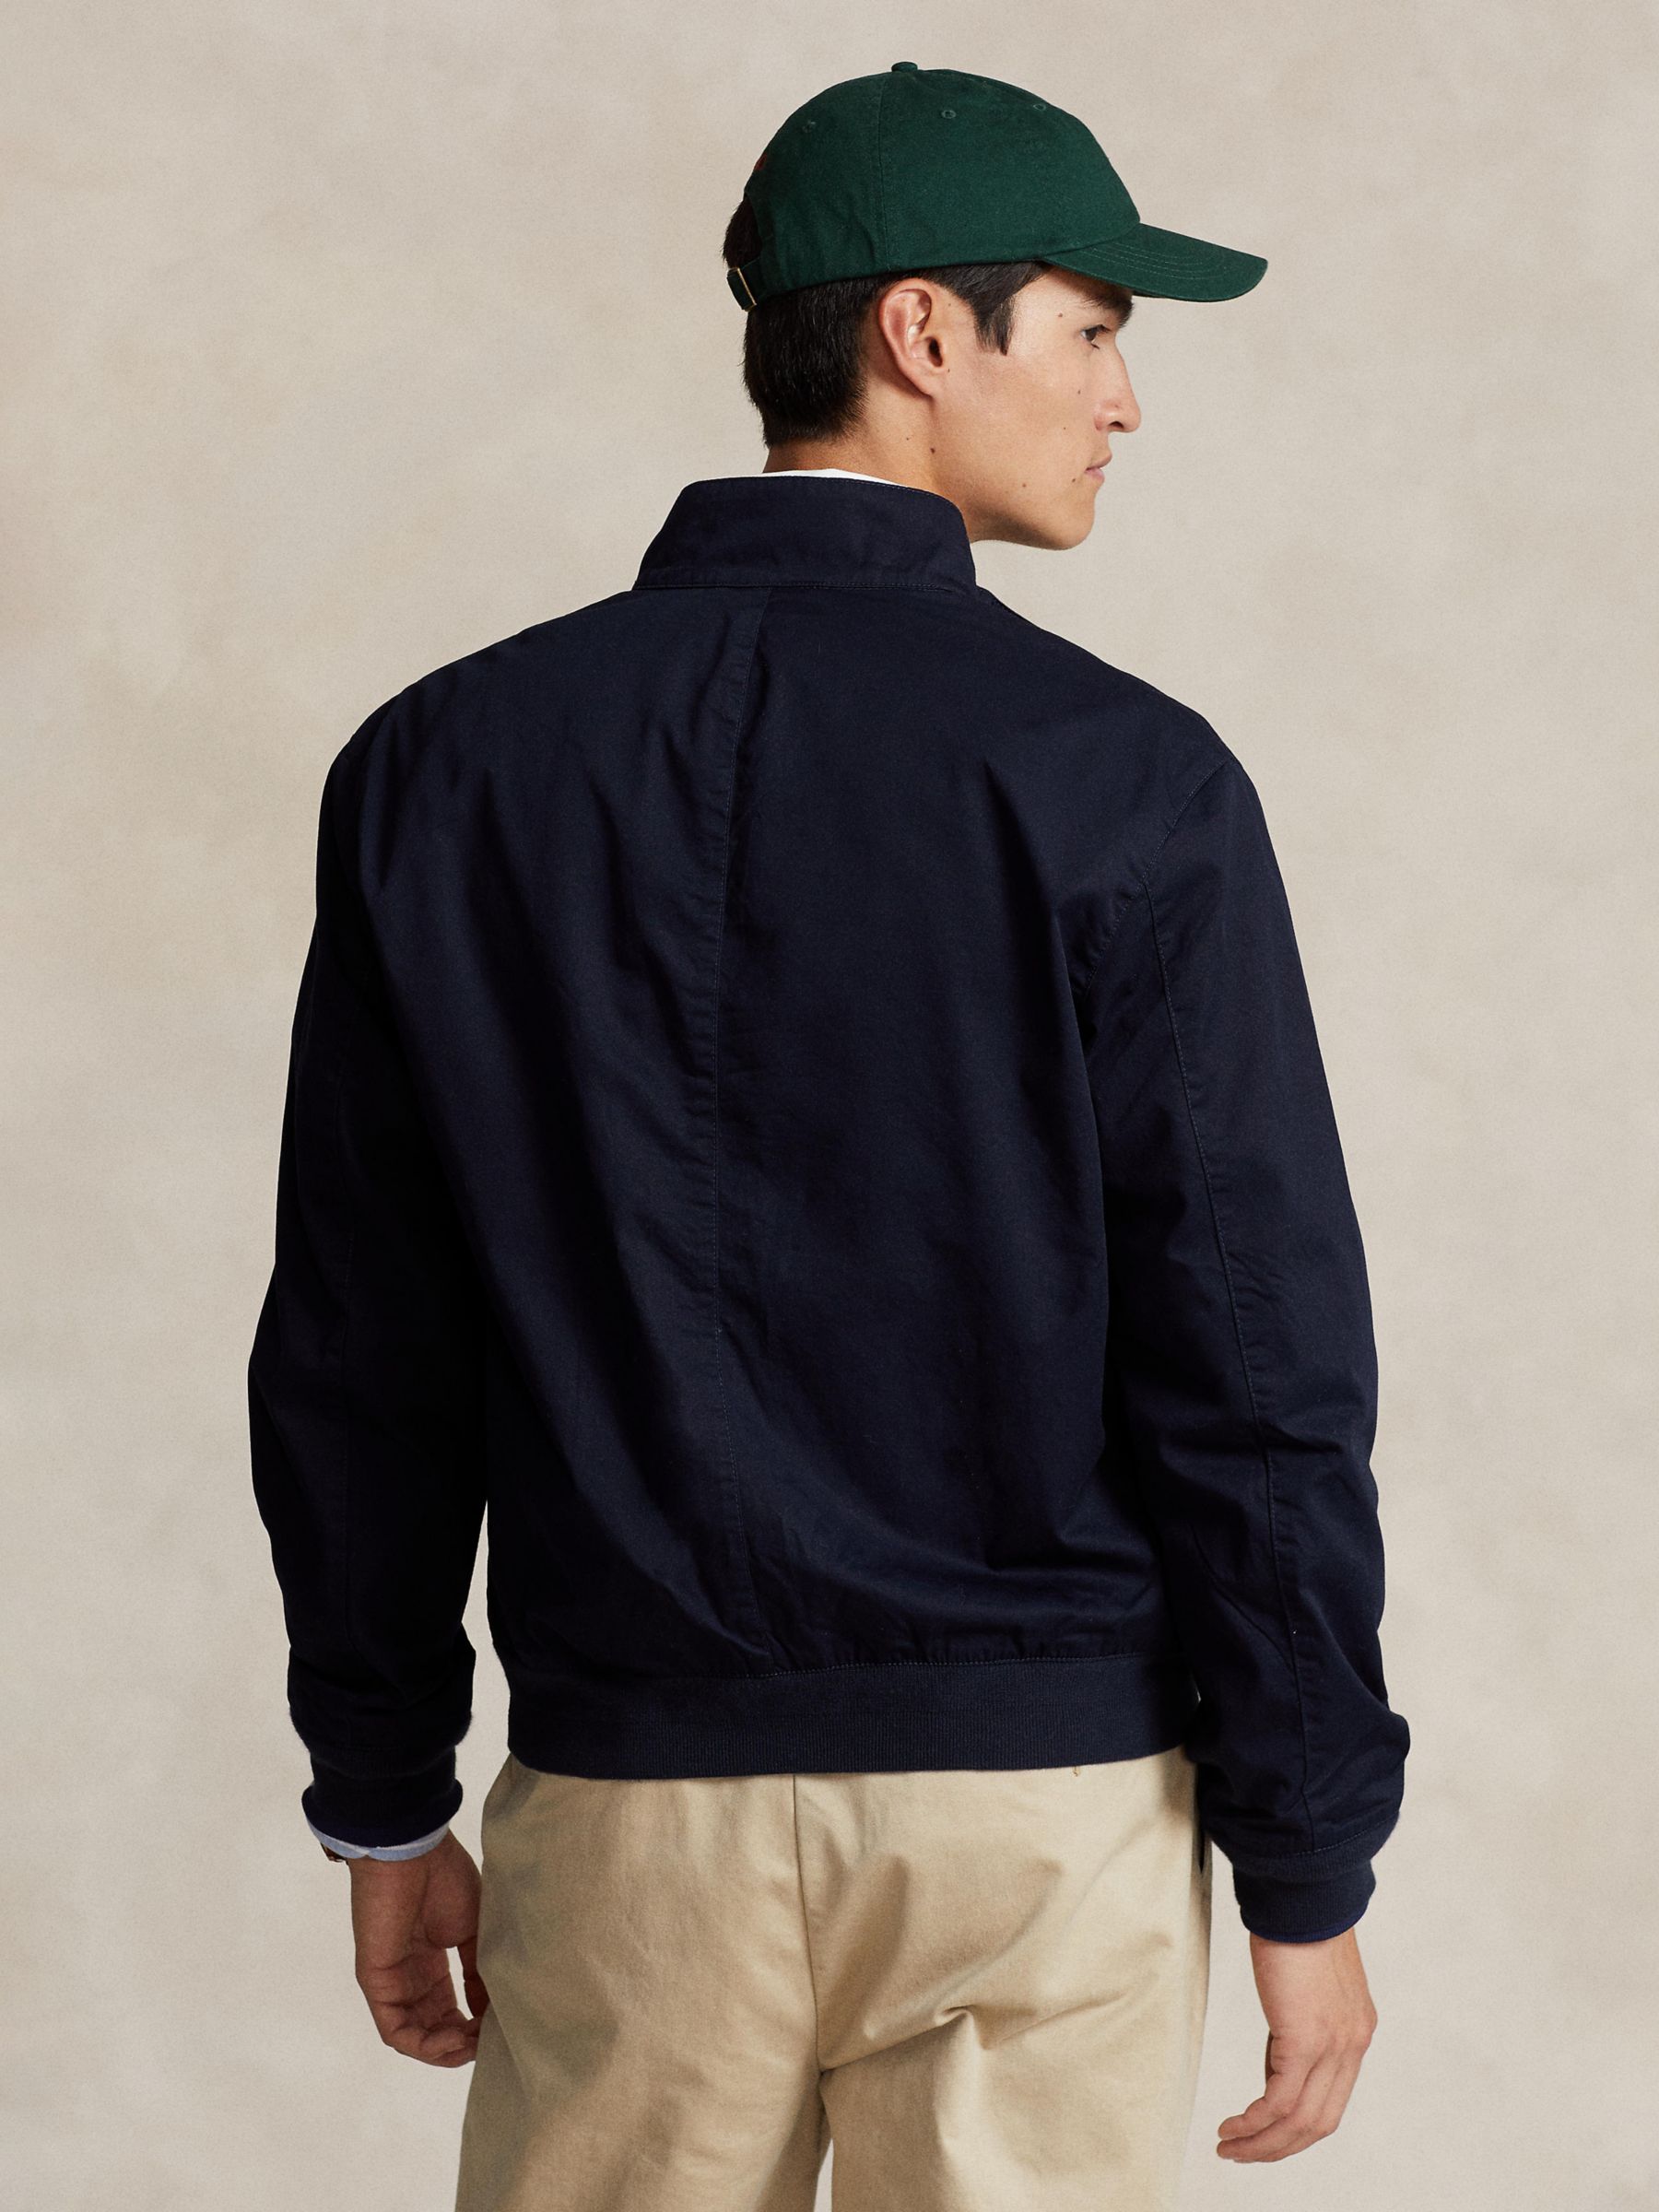 Polo Ralph Lauren Twill Windbreaker Jacket, Navy, S